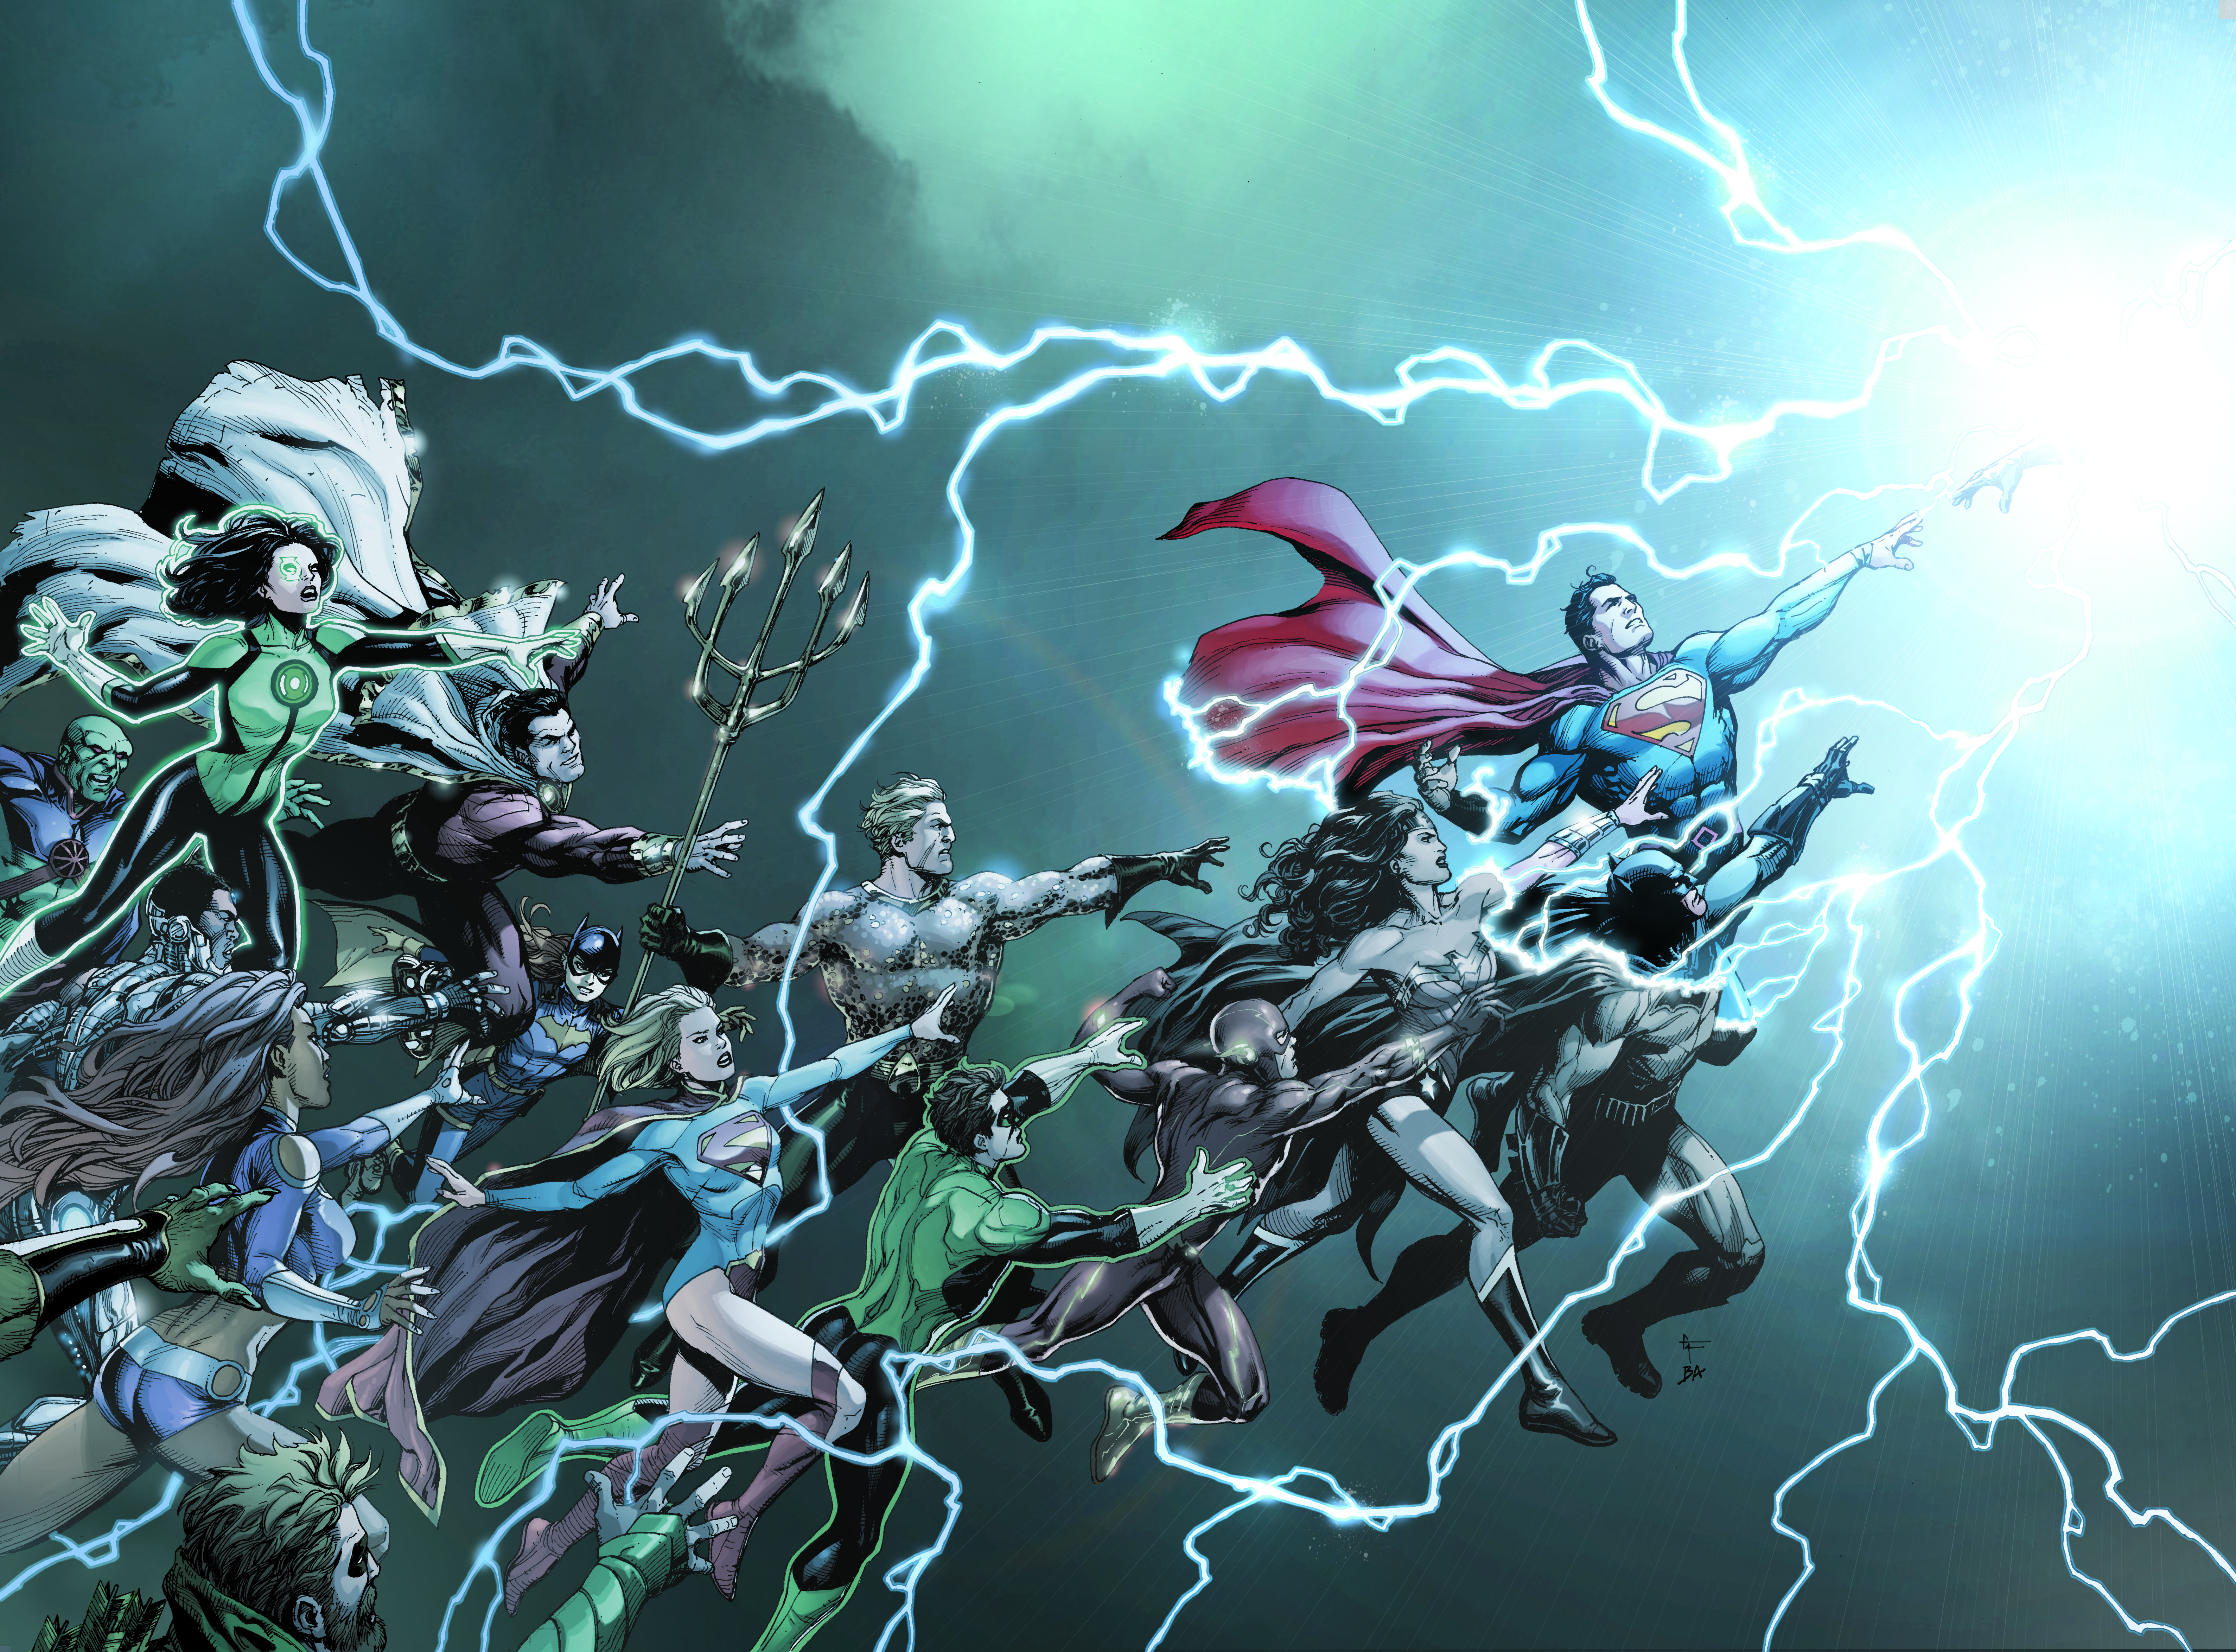 wonder woman, dc: rebirth, comics, aquaman, batgirl, batman, billy batson, cyborg (dc comics), dc comics, flash, green arrow, green lantern, hal jordan, j'onn j'onzz, jessica cruz (green lantern), justice league, koriand'r, martian manhunter, shazam (dc comics), starfire (dc comics), supergirl, superman